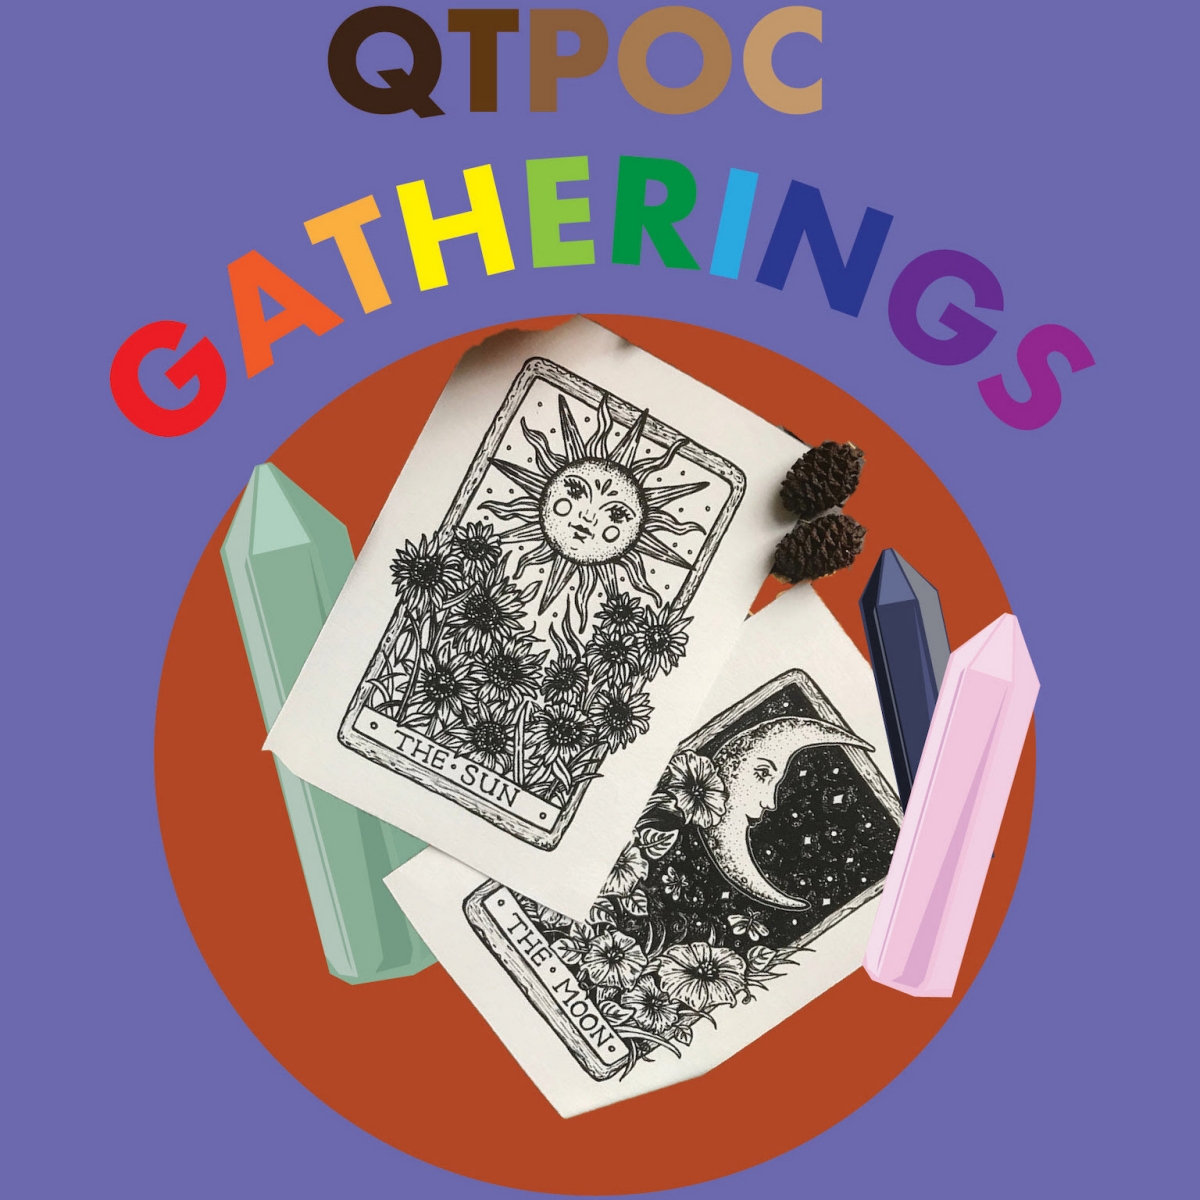 QTPOC Gatherings: Spirituality & Self